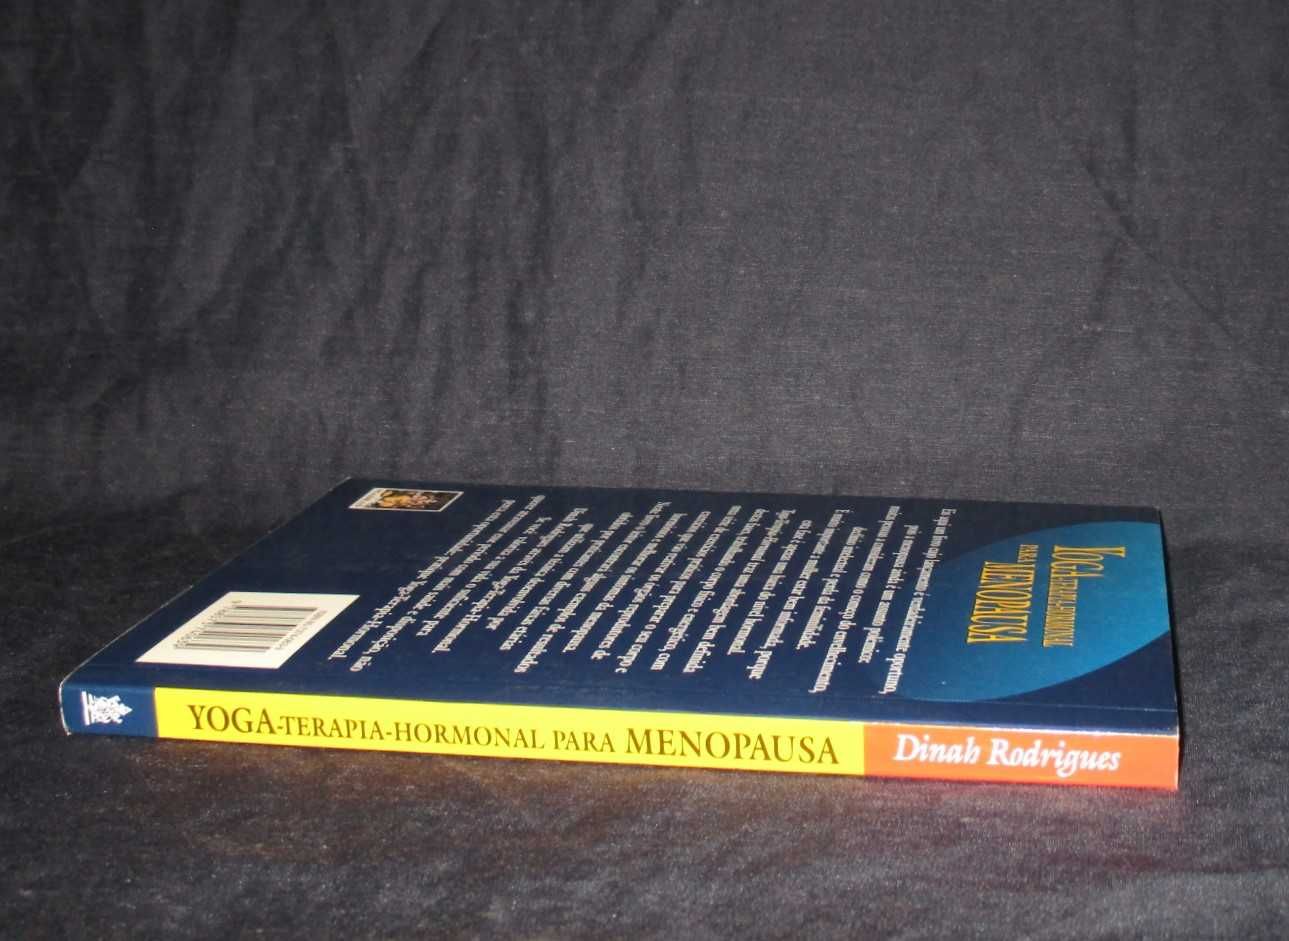 Livro Yoga-Terapia Hormonal para Menopausa Dinah Rodrigues